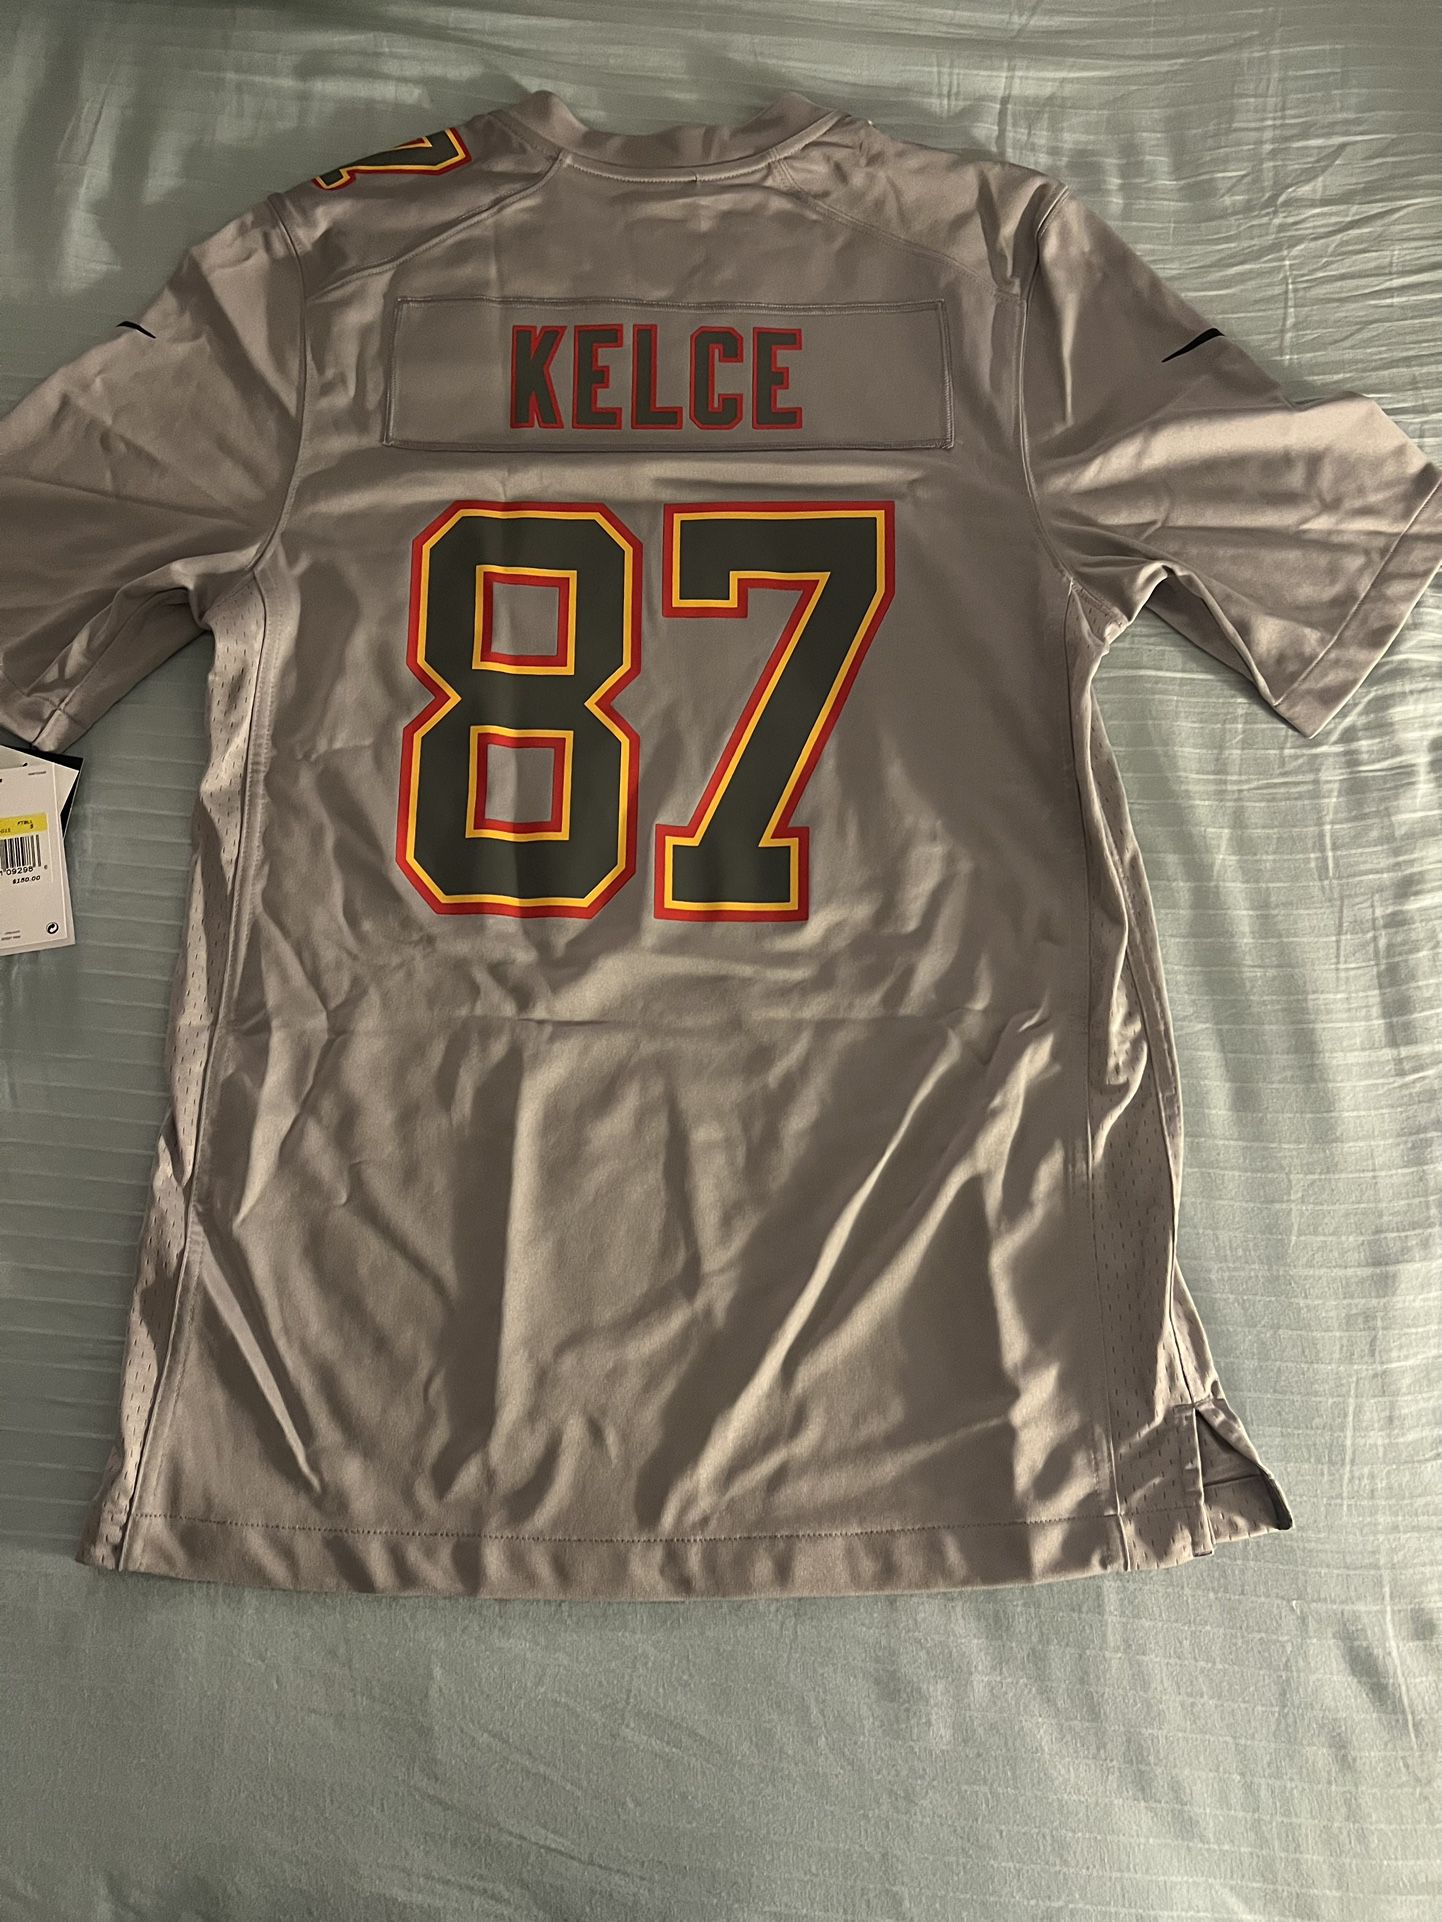 Nike Nfl Kansas City Chiefs Kelce Super Bowl 3rd jersey for Sale